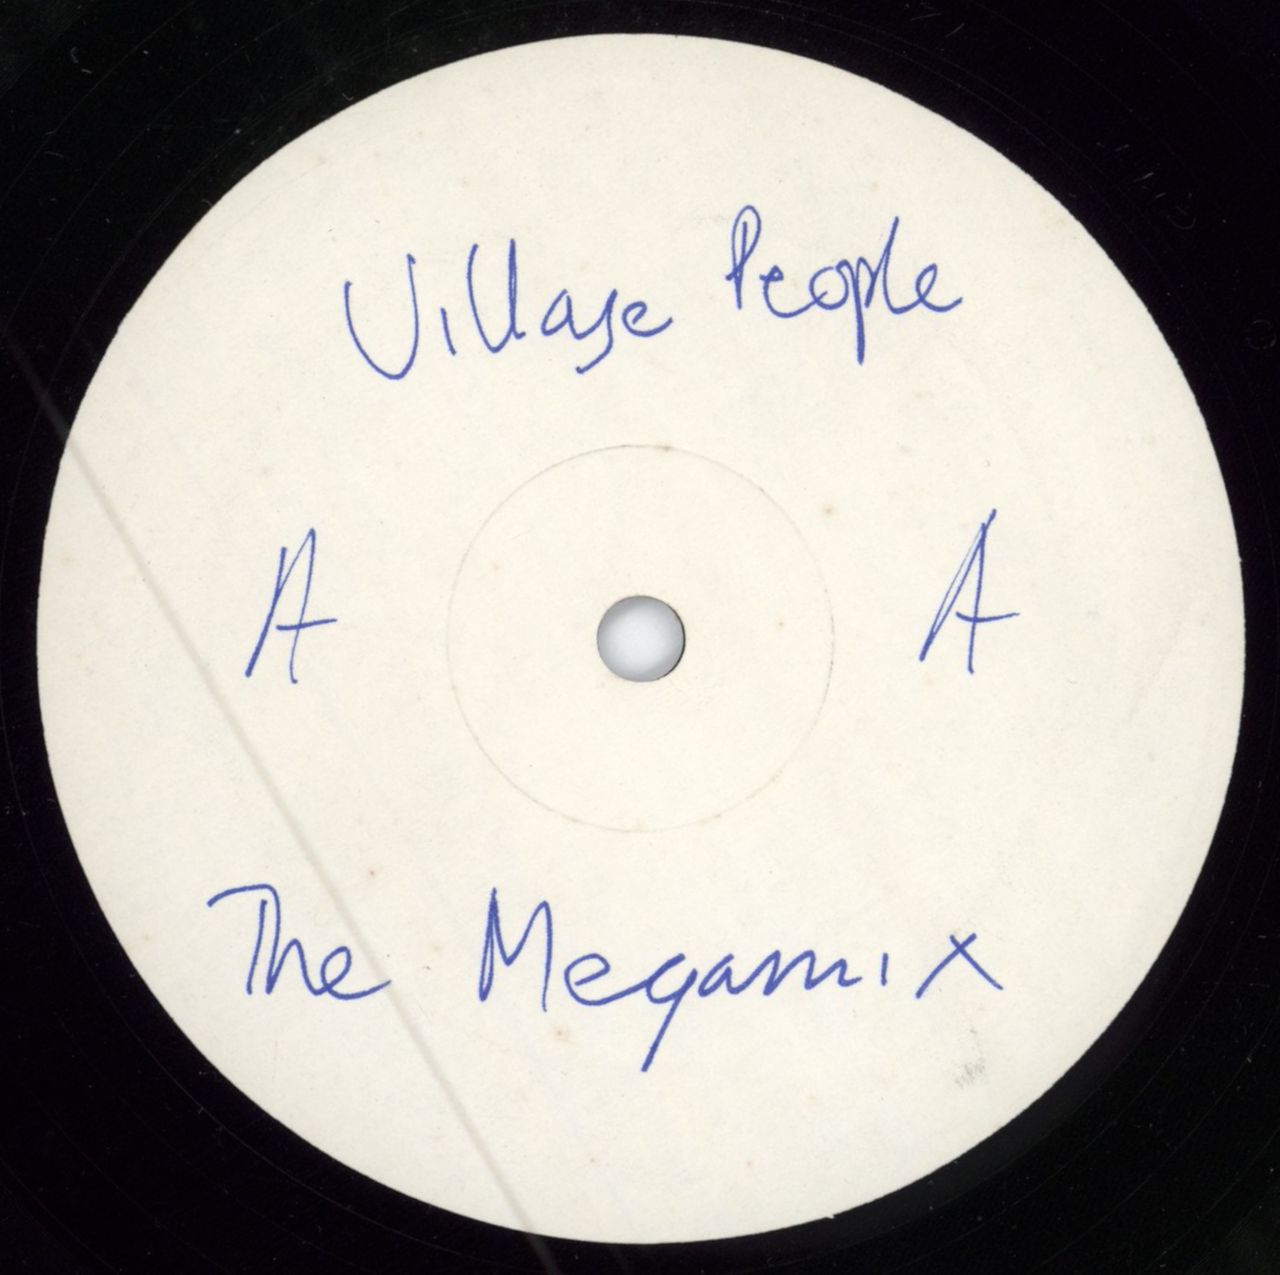 Village People Megamix - Test Pressing German 12" vinyl single (12 inch record / Maxi-single) 12299